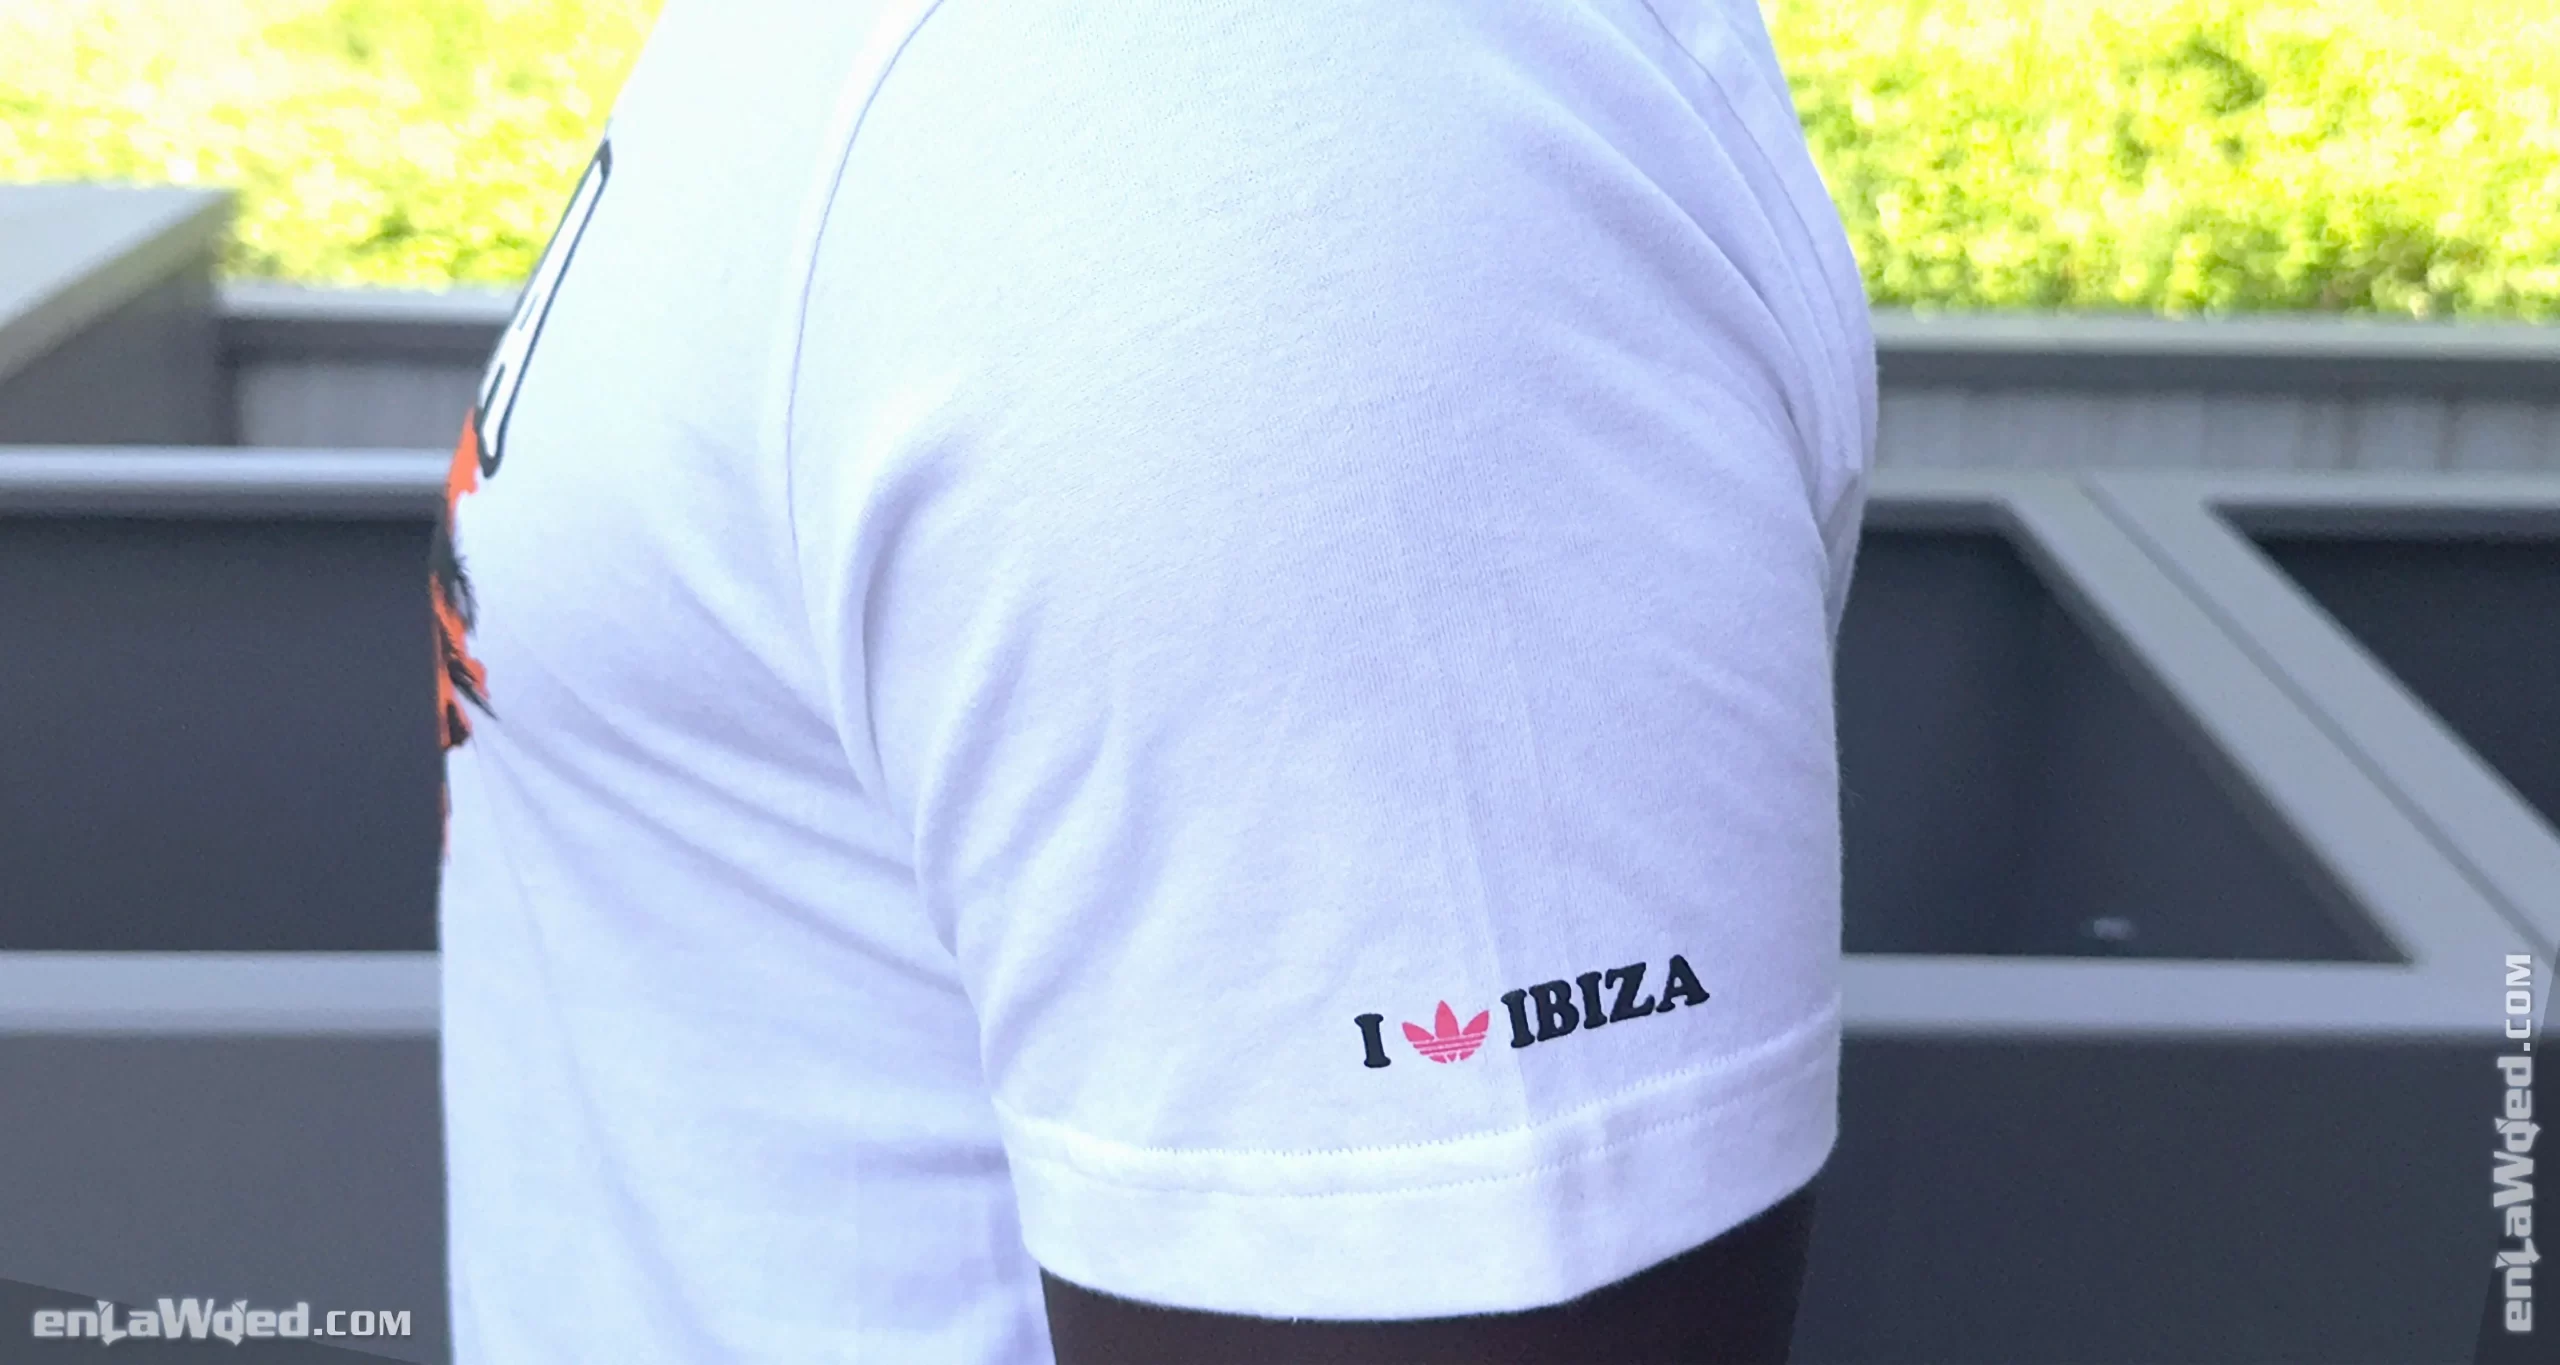 Men’s 2007 Ibiza T-Shirt by Adidas Originals: Ignite (EnLawded.com file #lmc5pc81pgxyxll8xv)